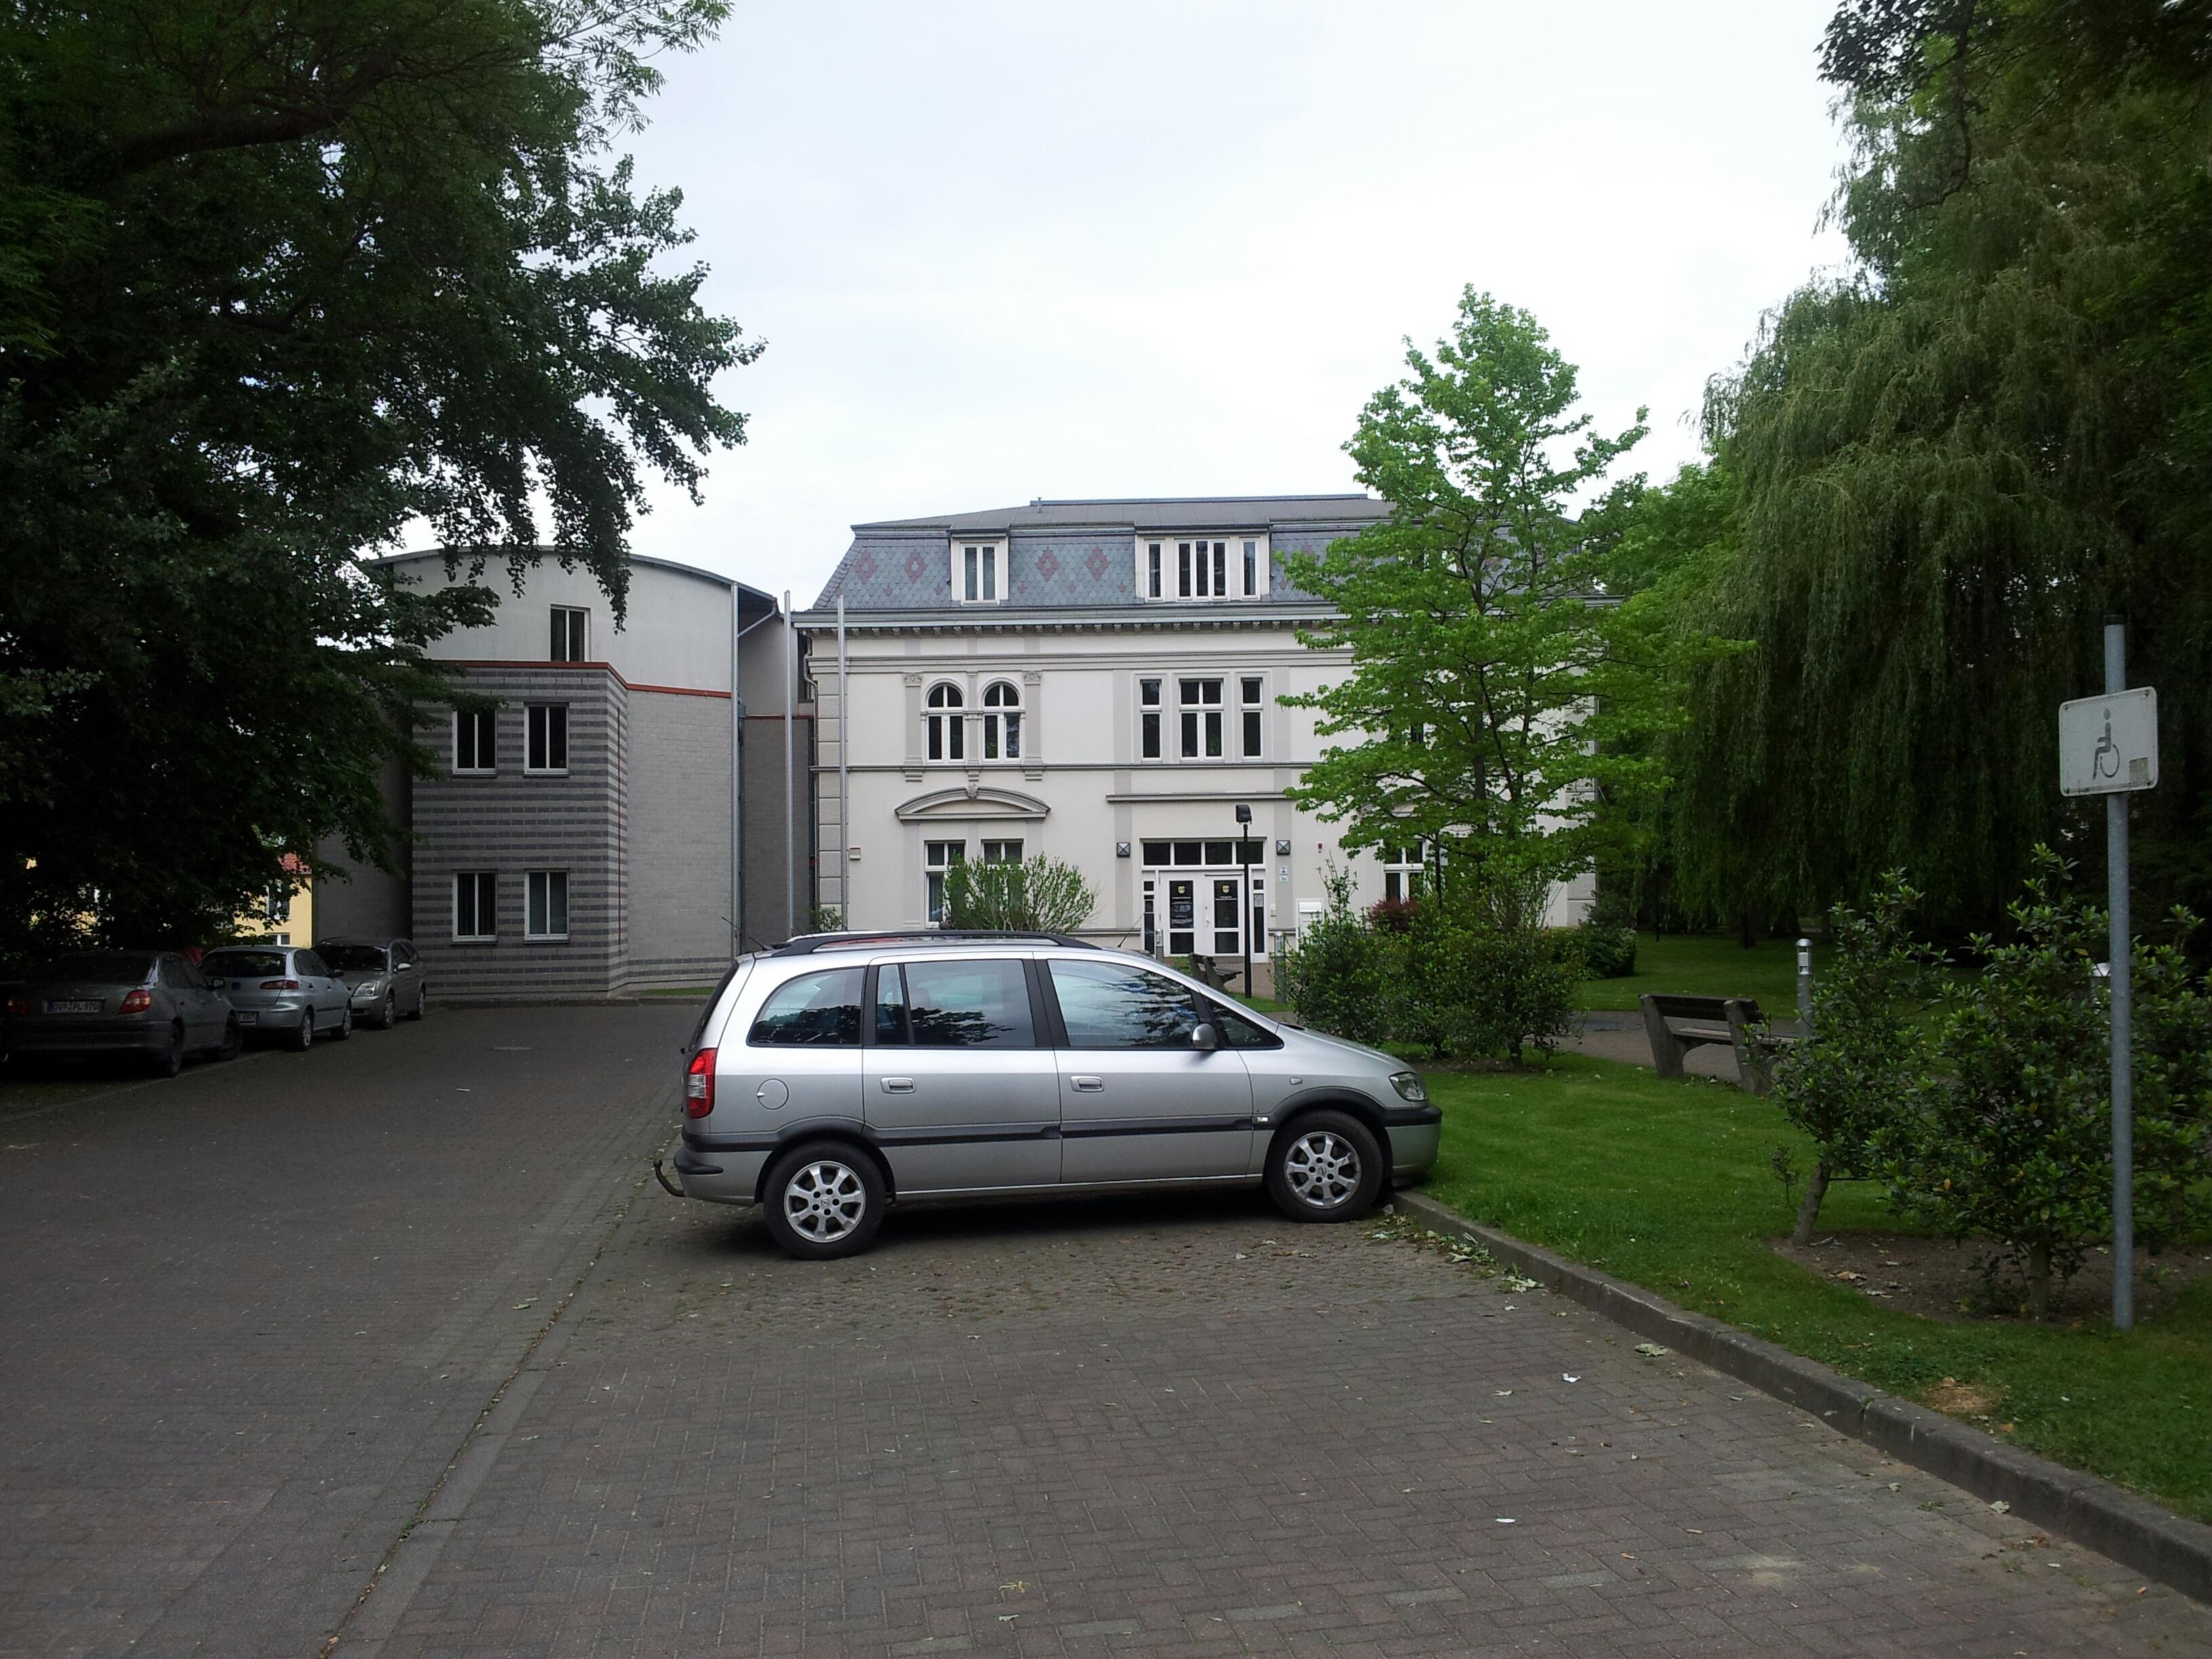 Bild 1 Amtsgericht Greifswald in Greifswald Hansestadt